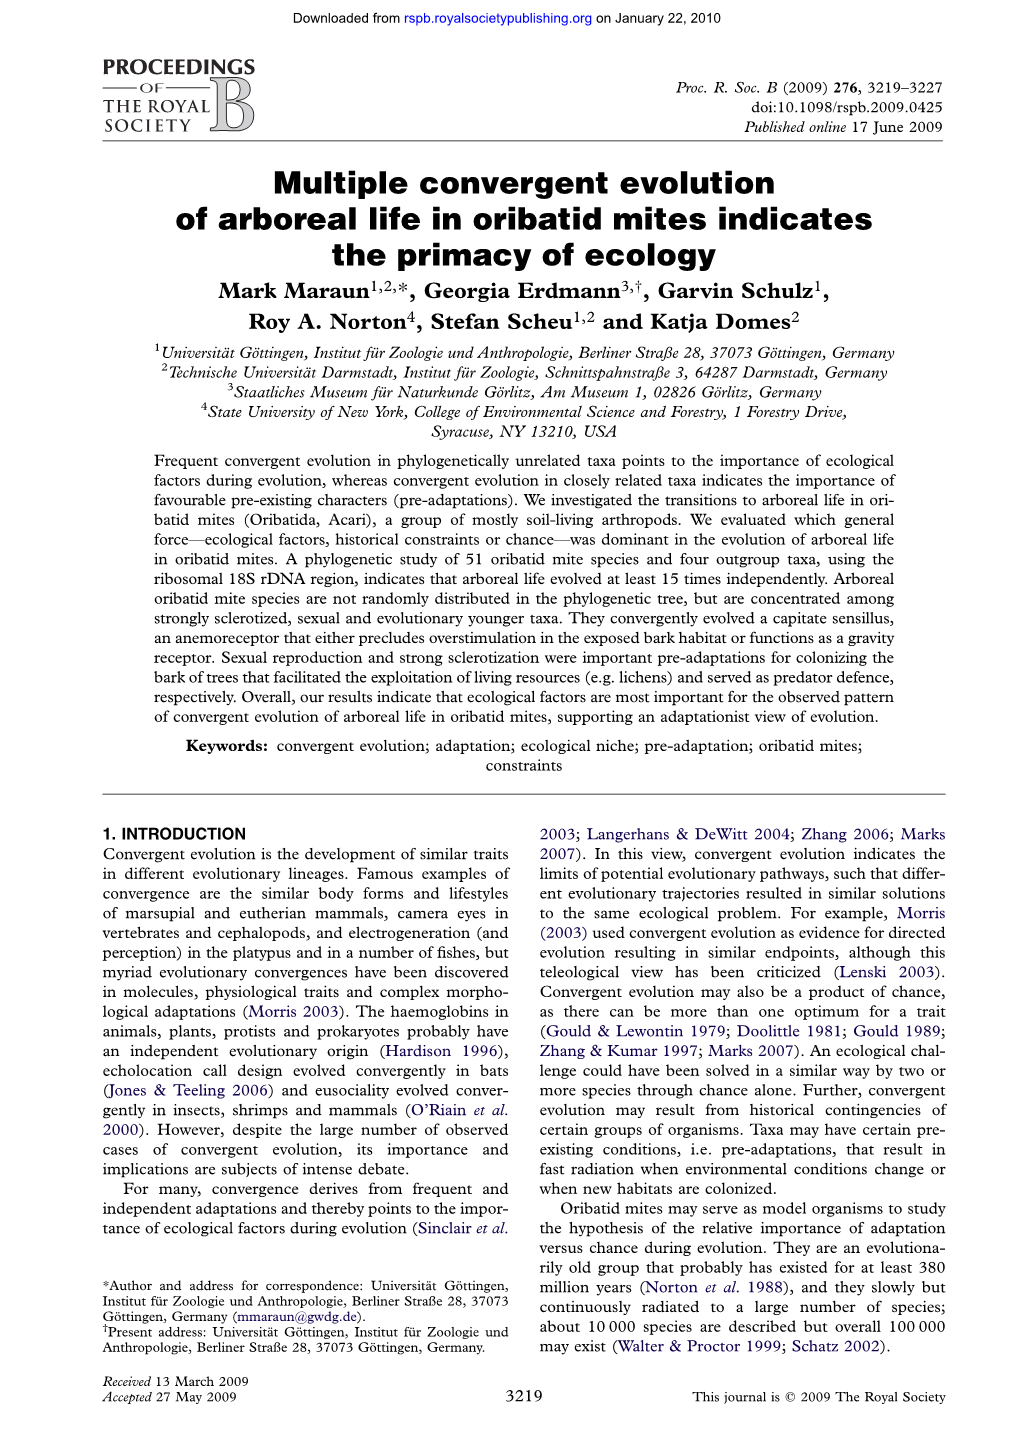 Multiple Convergent Evolution of Arboreal Life in Oribatid Mites Indicates the Primacy of Ecology Mark Maraun1,2,*, Georgia Erdmann3,†, Garvin Schulz1, Roy A